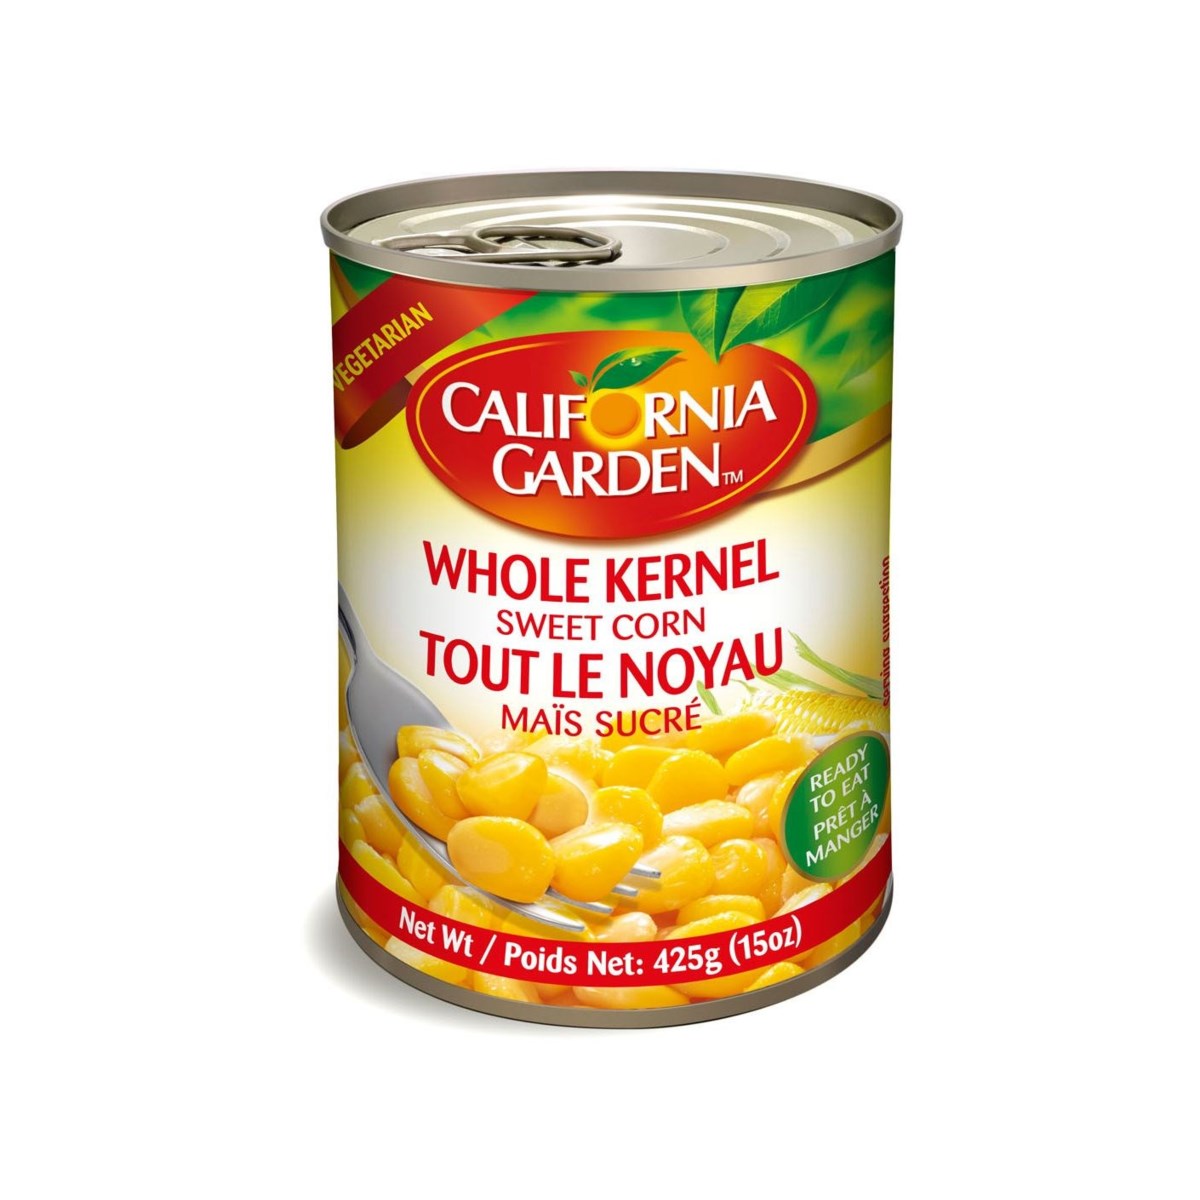 Whole Kernel Sweet Corn "California Garden" 400g x